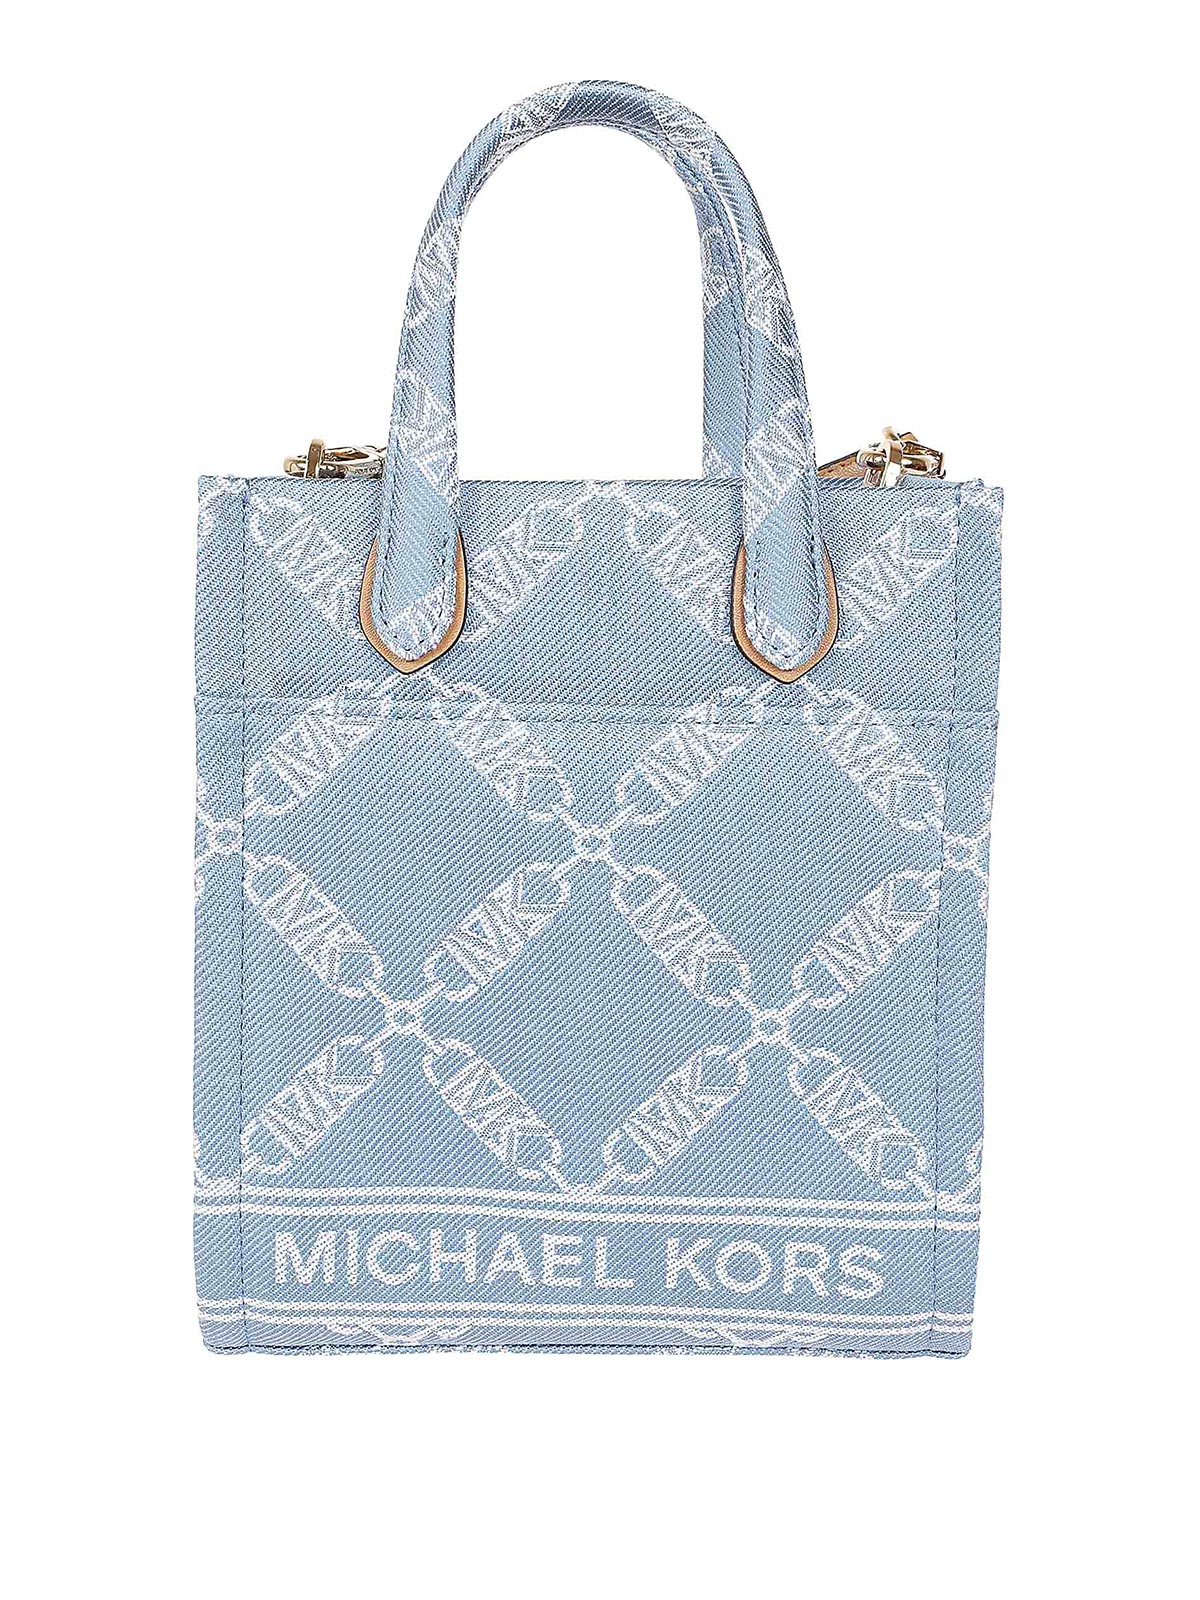 Michael Kors Jacquard Bag In Blue